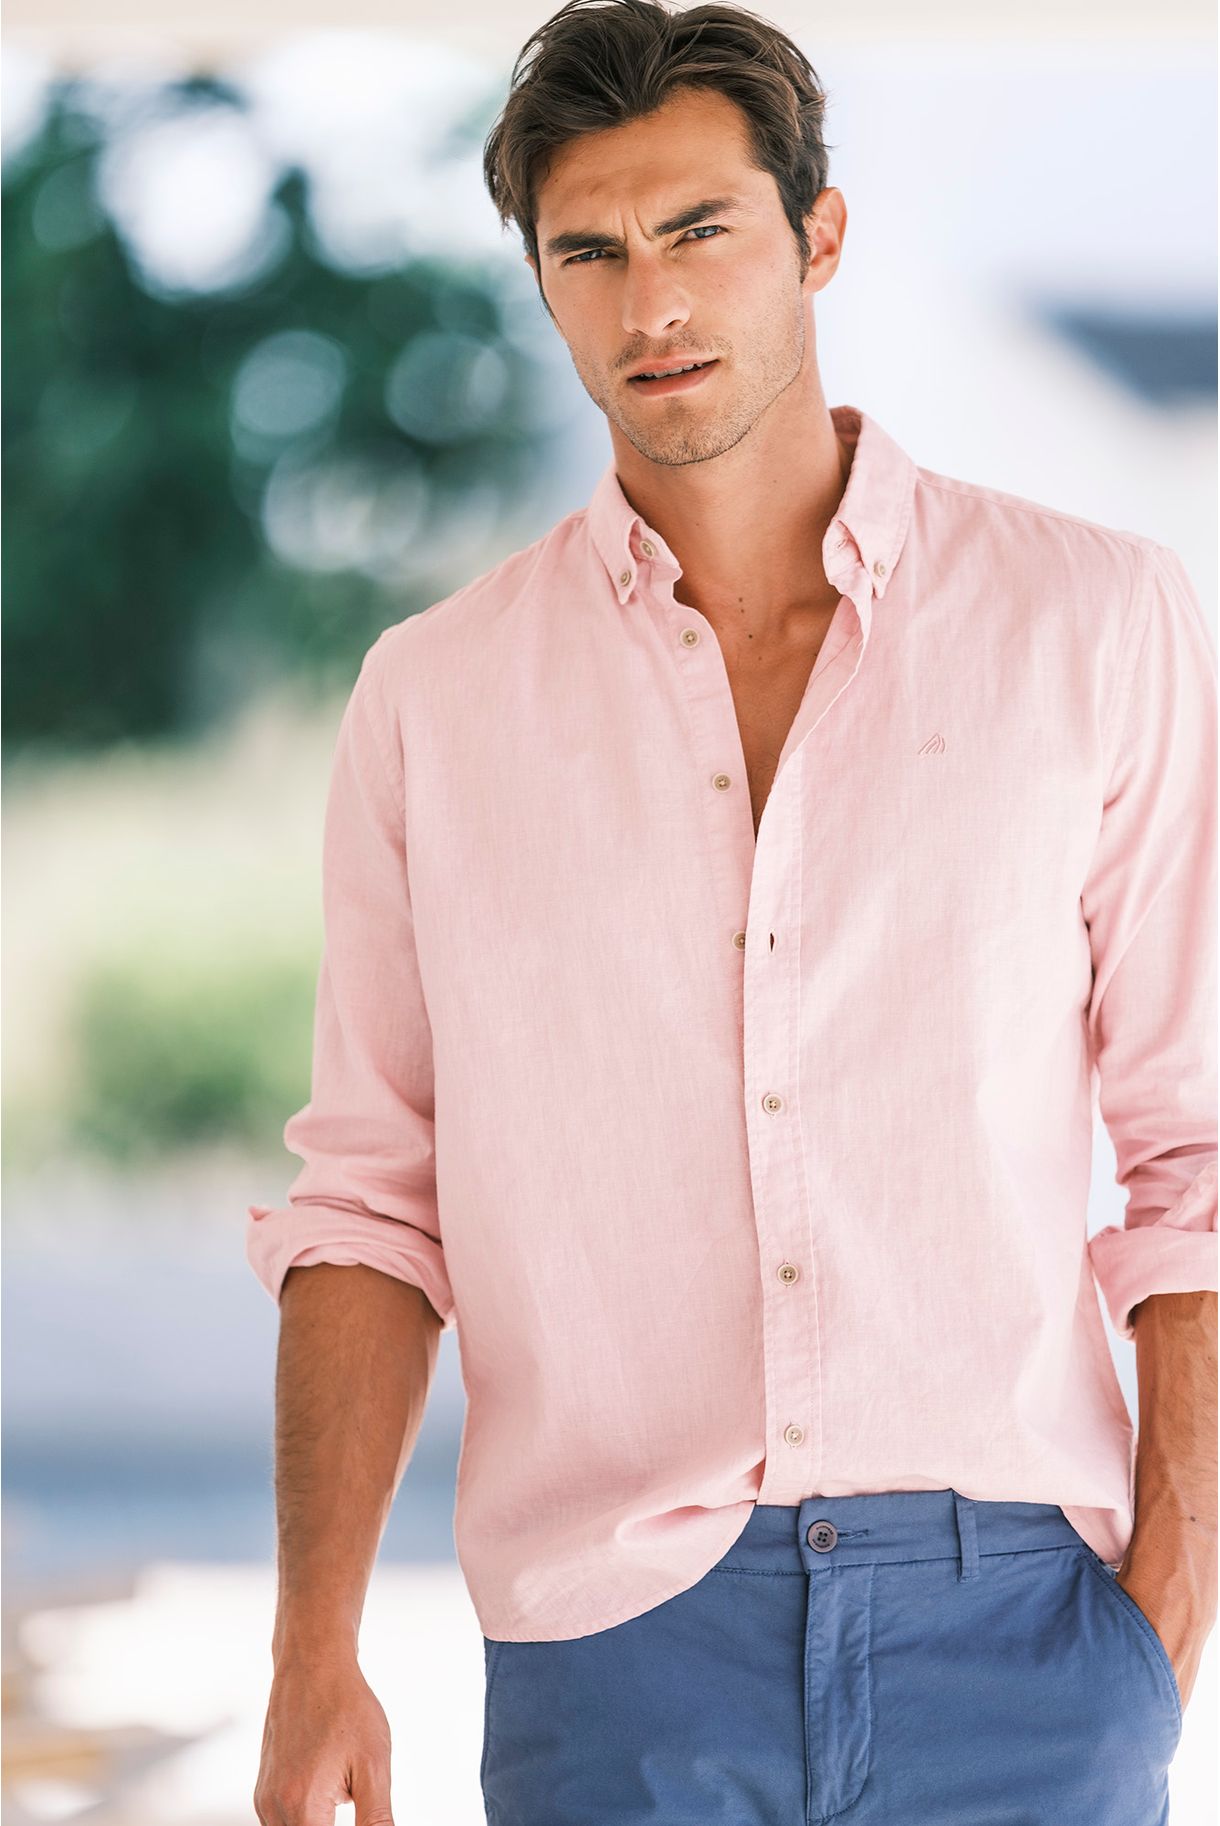 Basic cotton and linen shirt